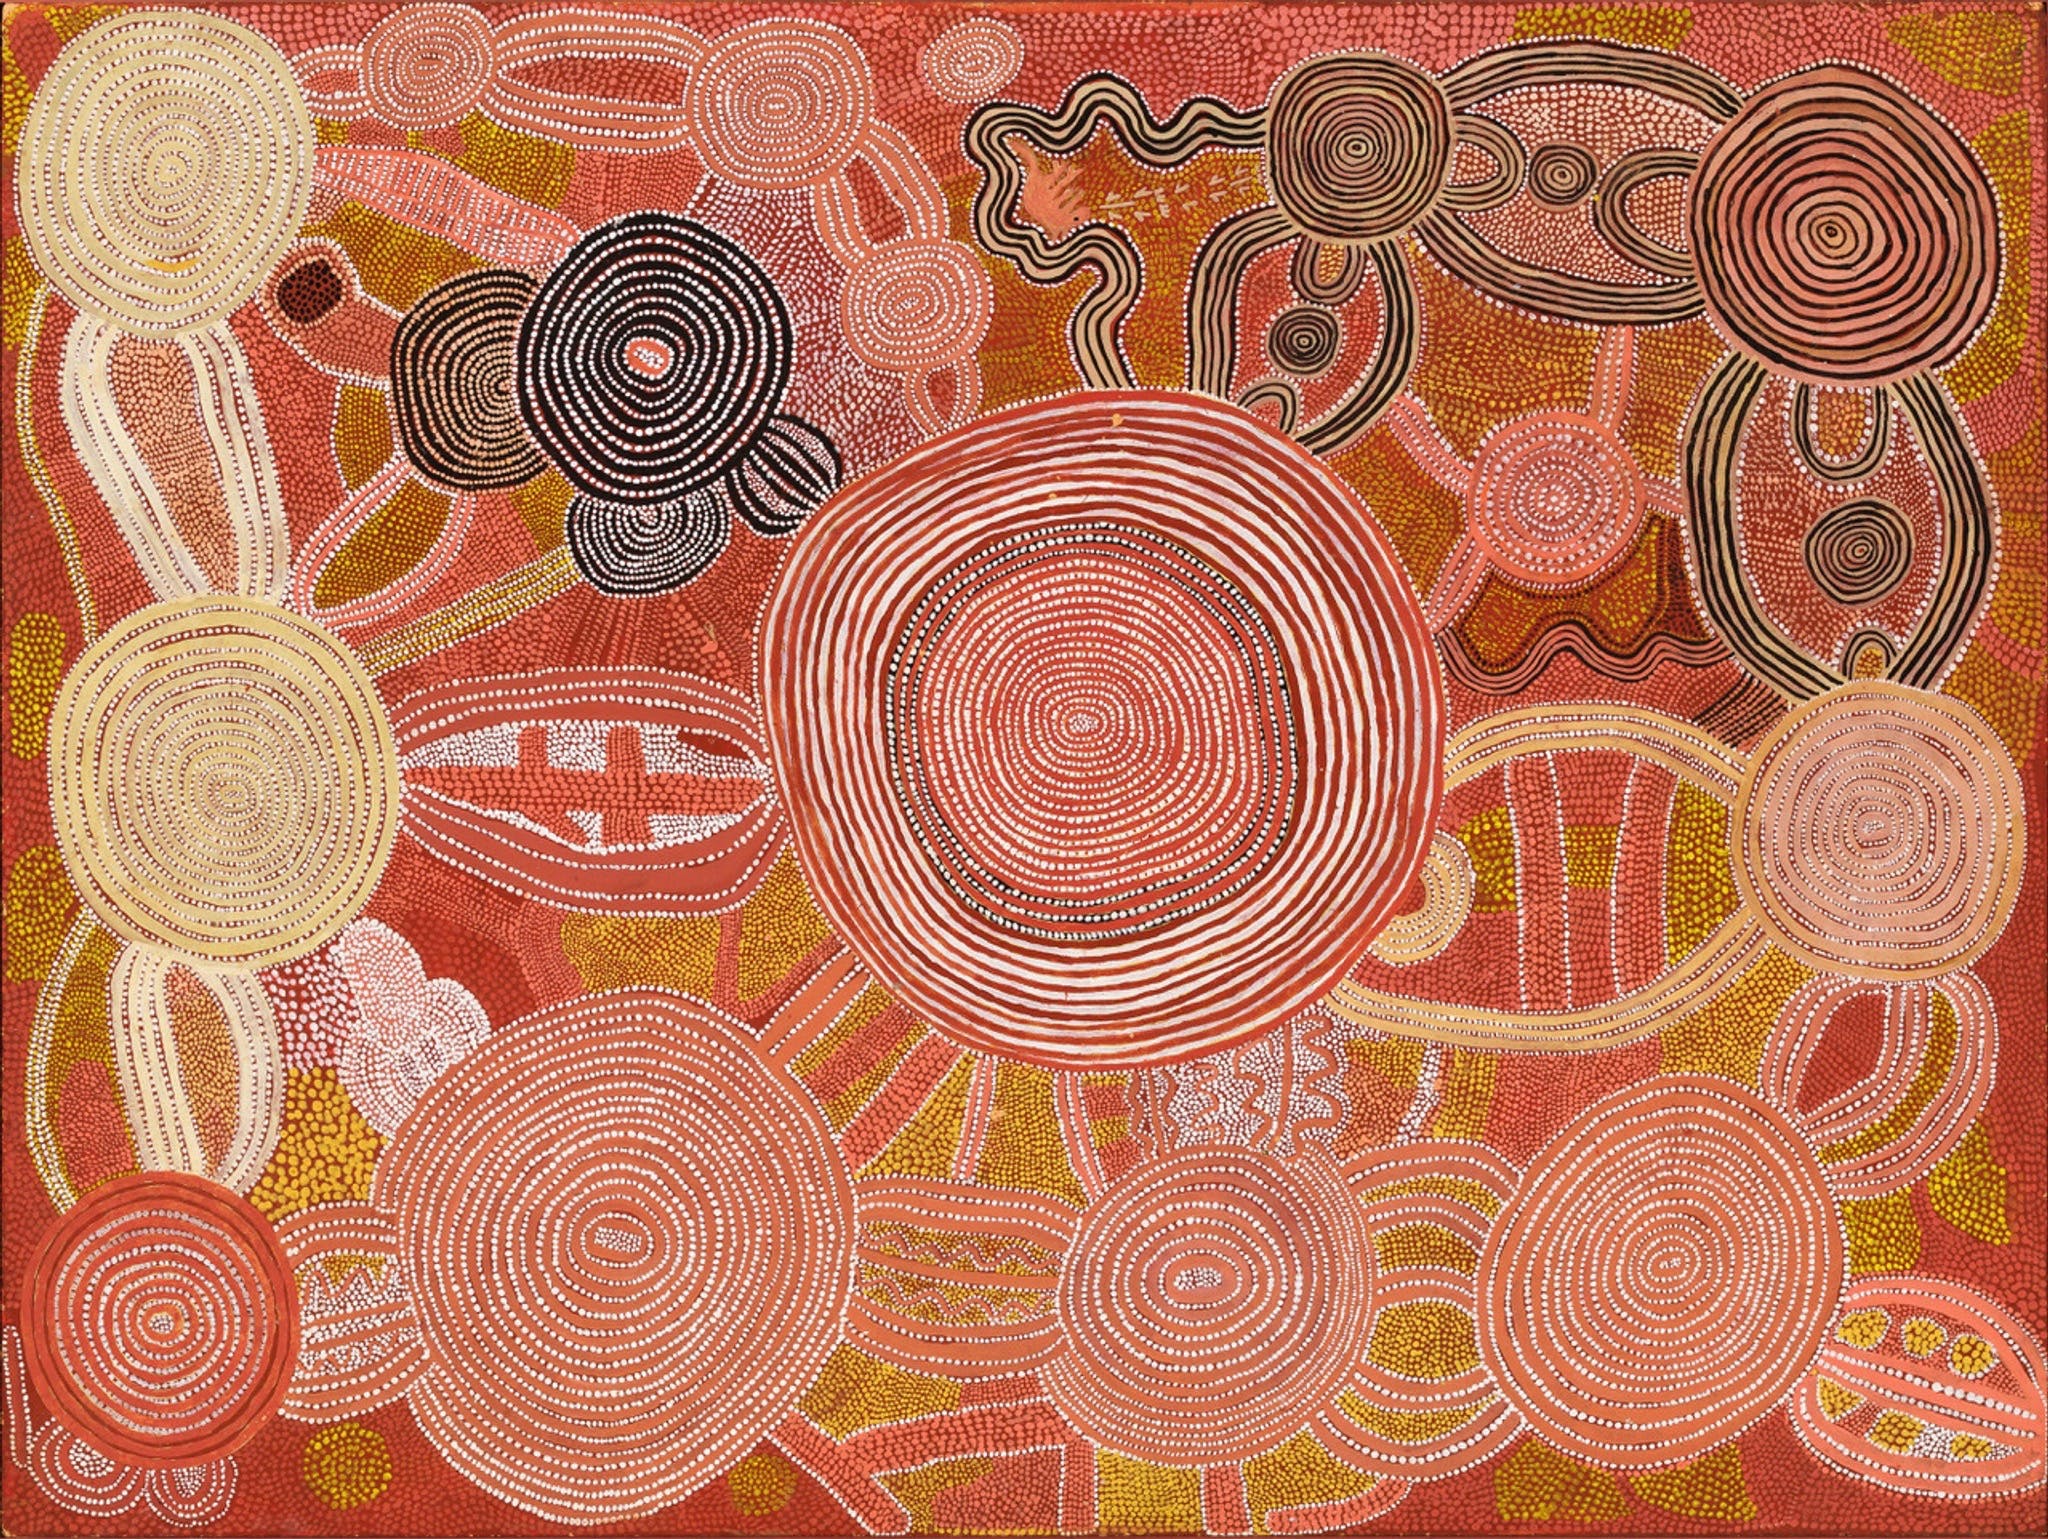 Reverence Exhibition of Australian Indigenous Art - St Kilda Accommodation